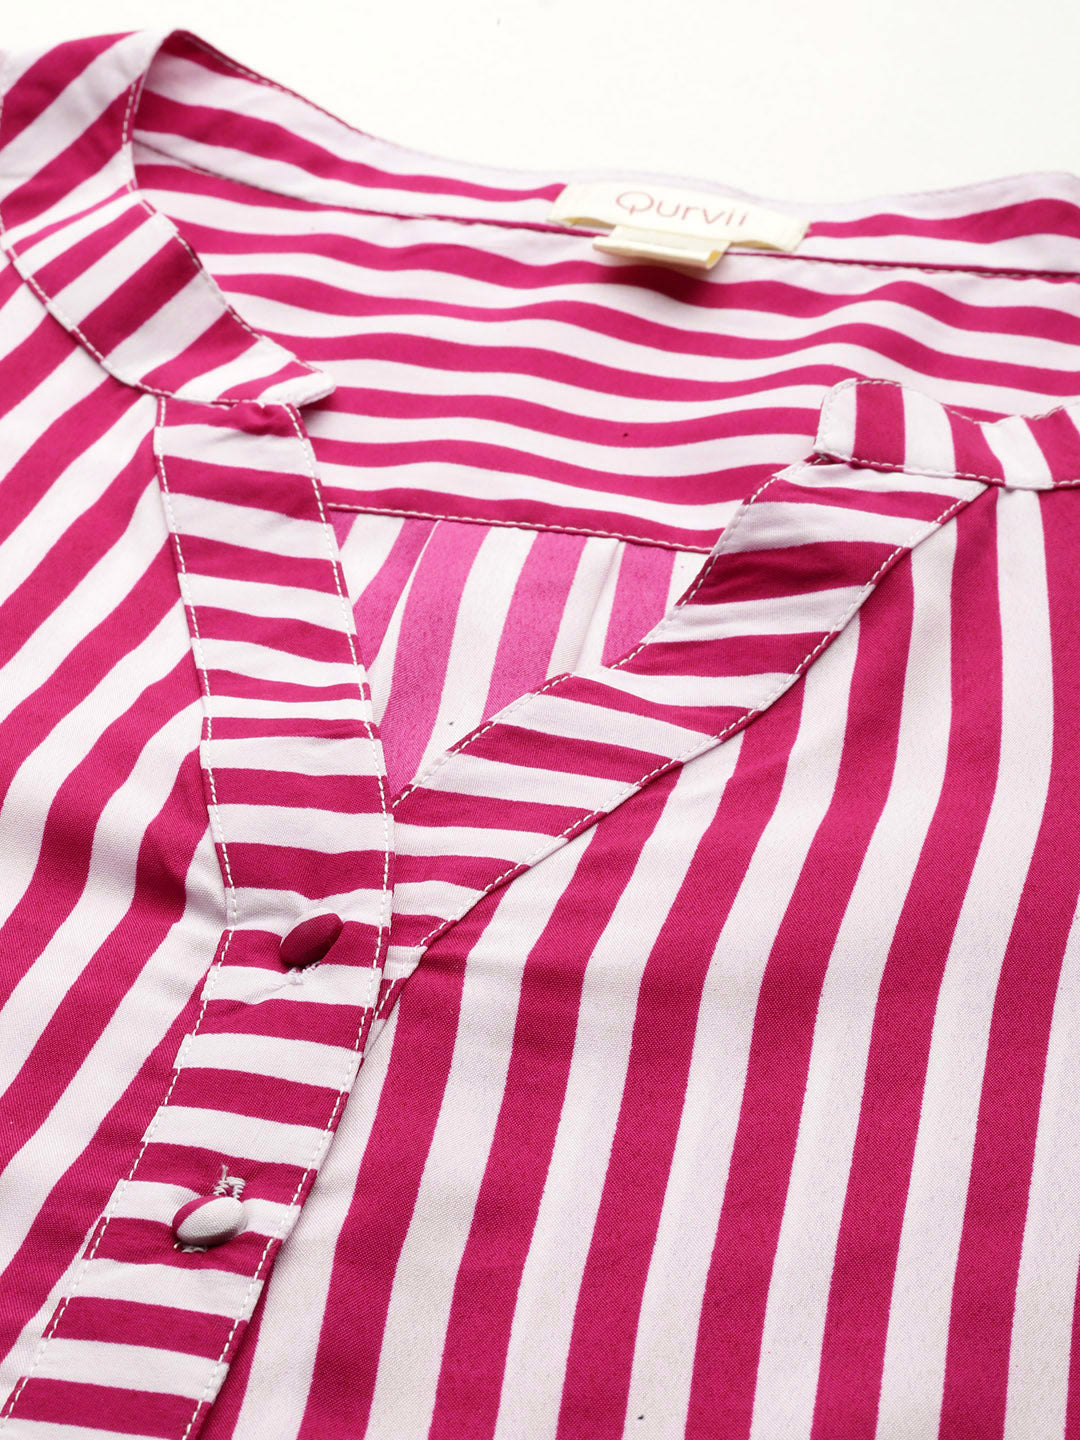 Magenta & white stripe crepe shirt and pant co-ord set